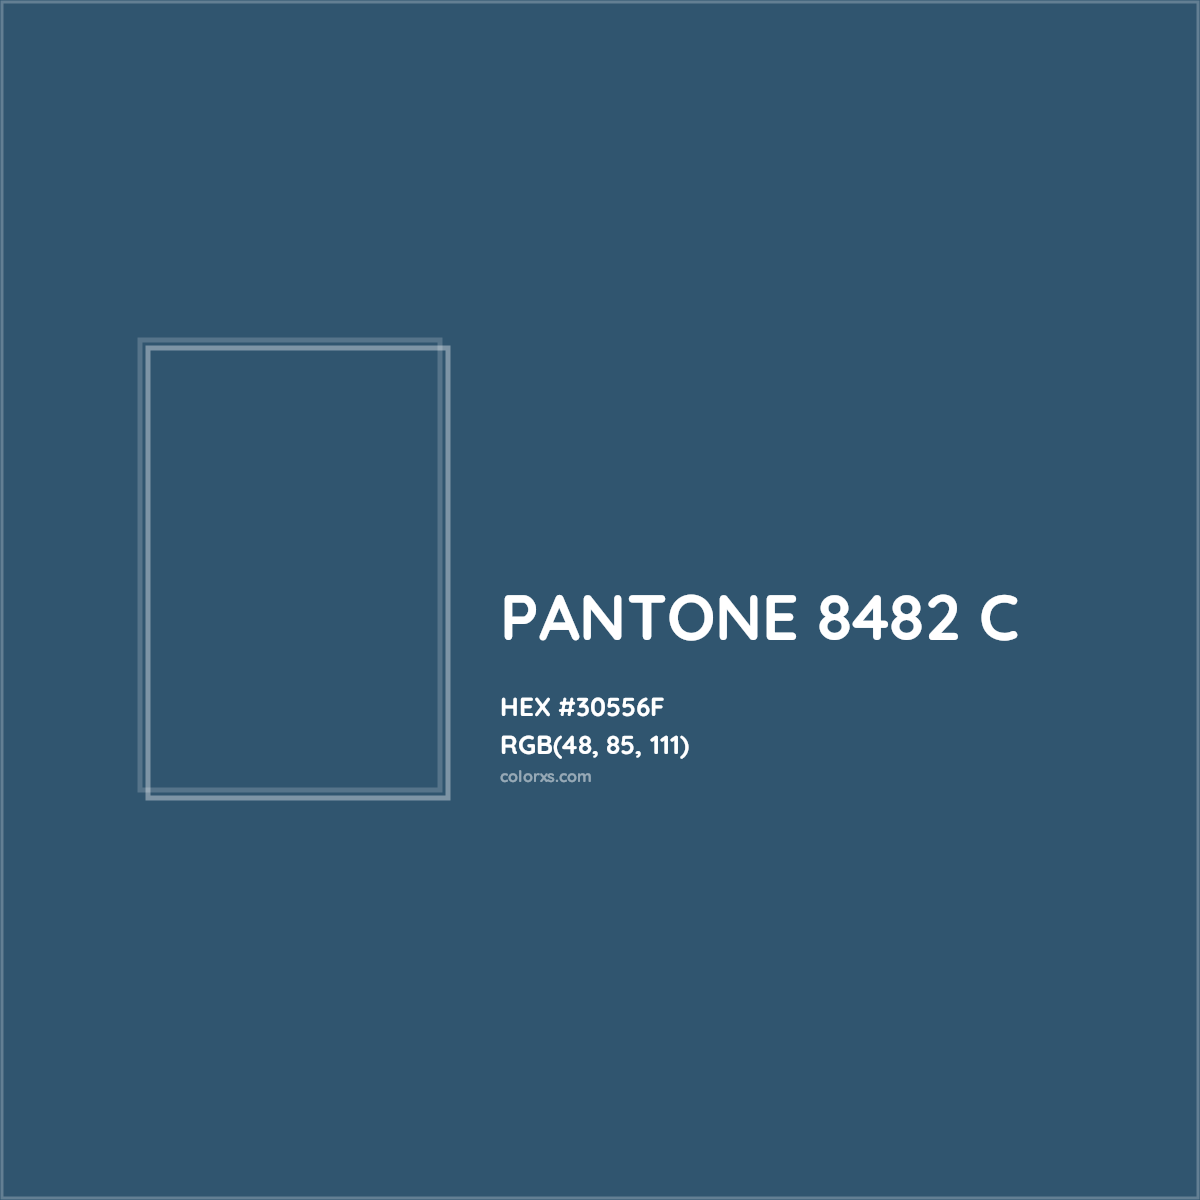 HEX #30556F PANTONE 8482 C CMS Pantone PMS - Color Code